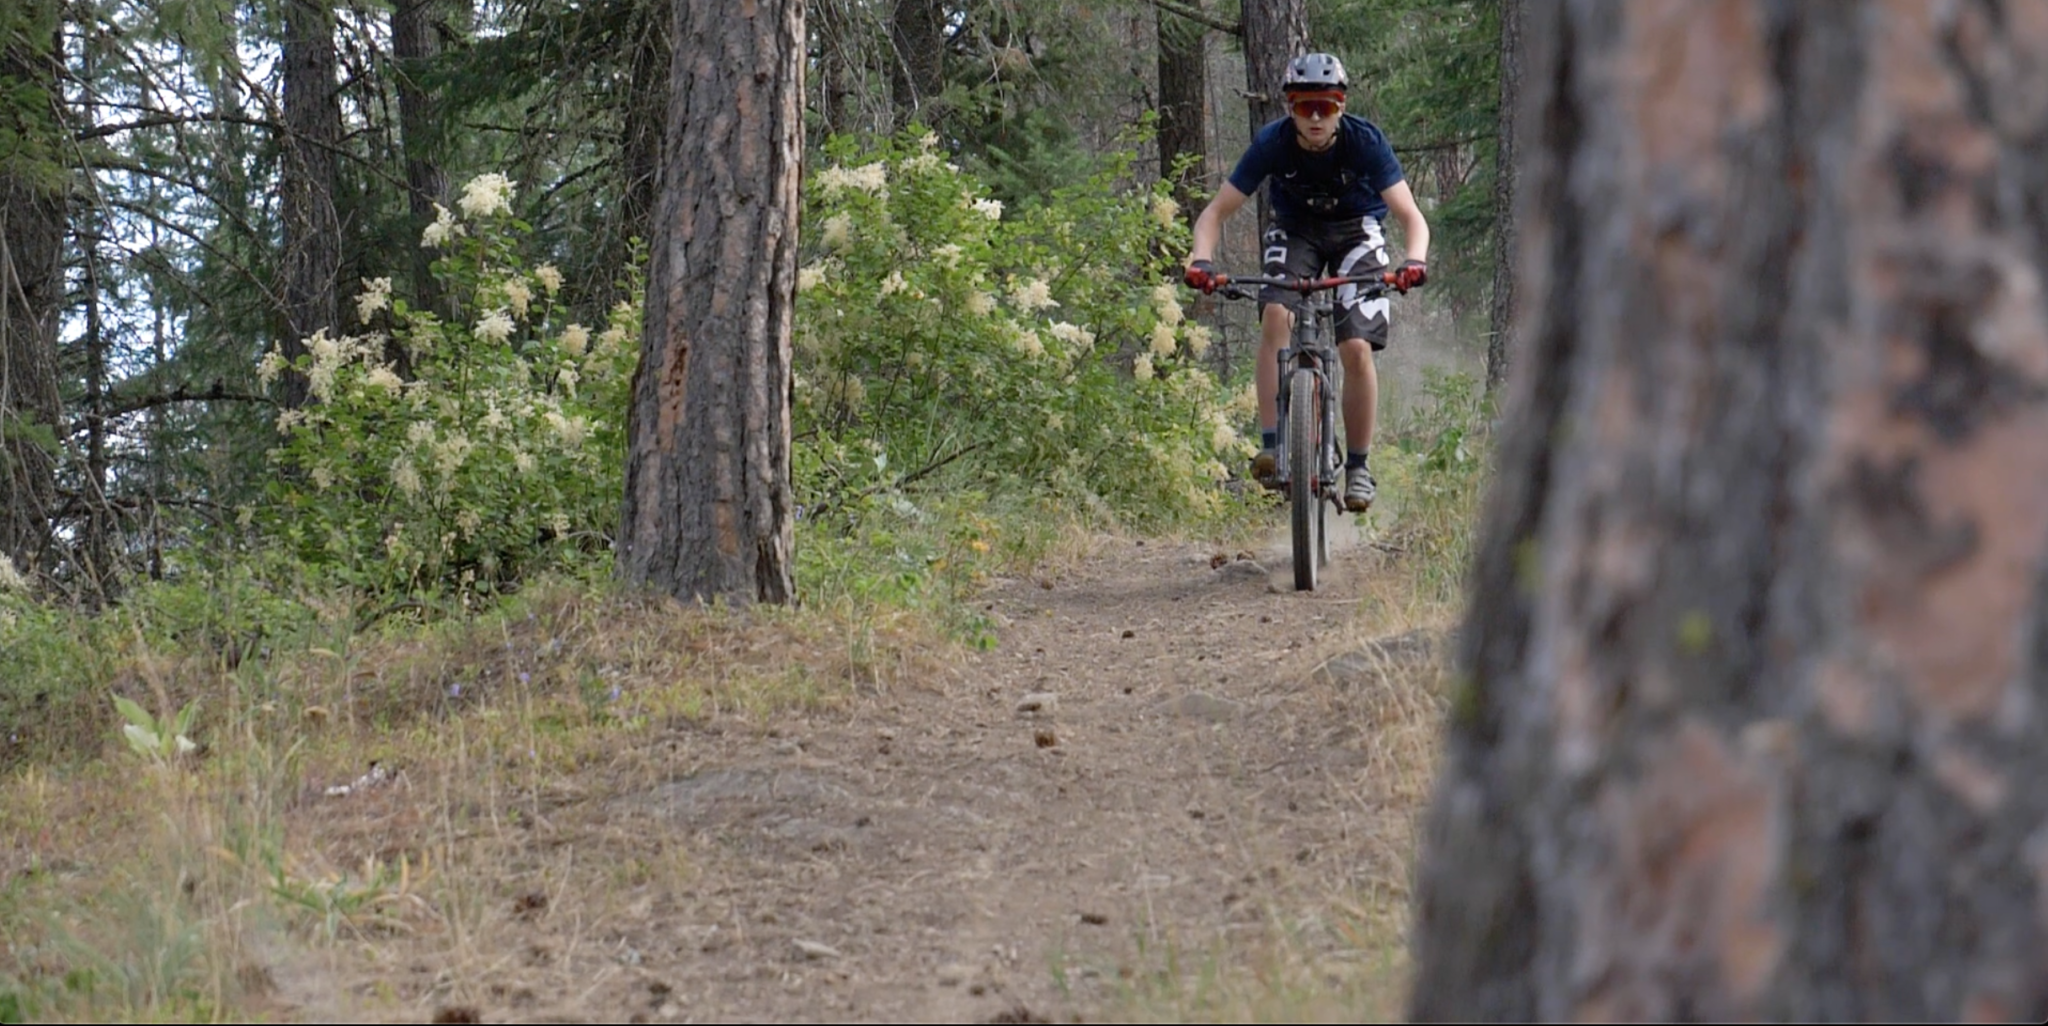 An avid mountain biker makes his way down a nearby trail.